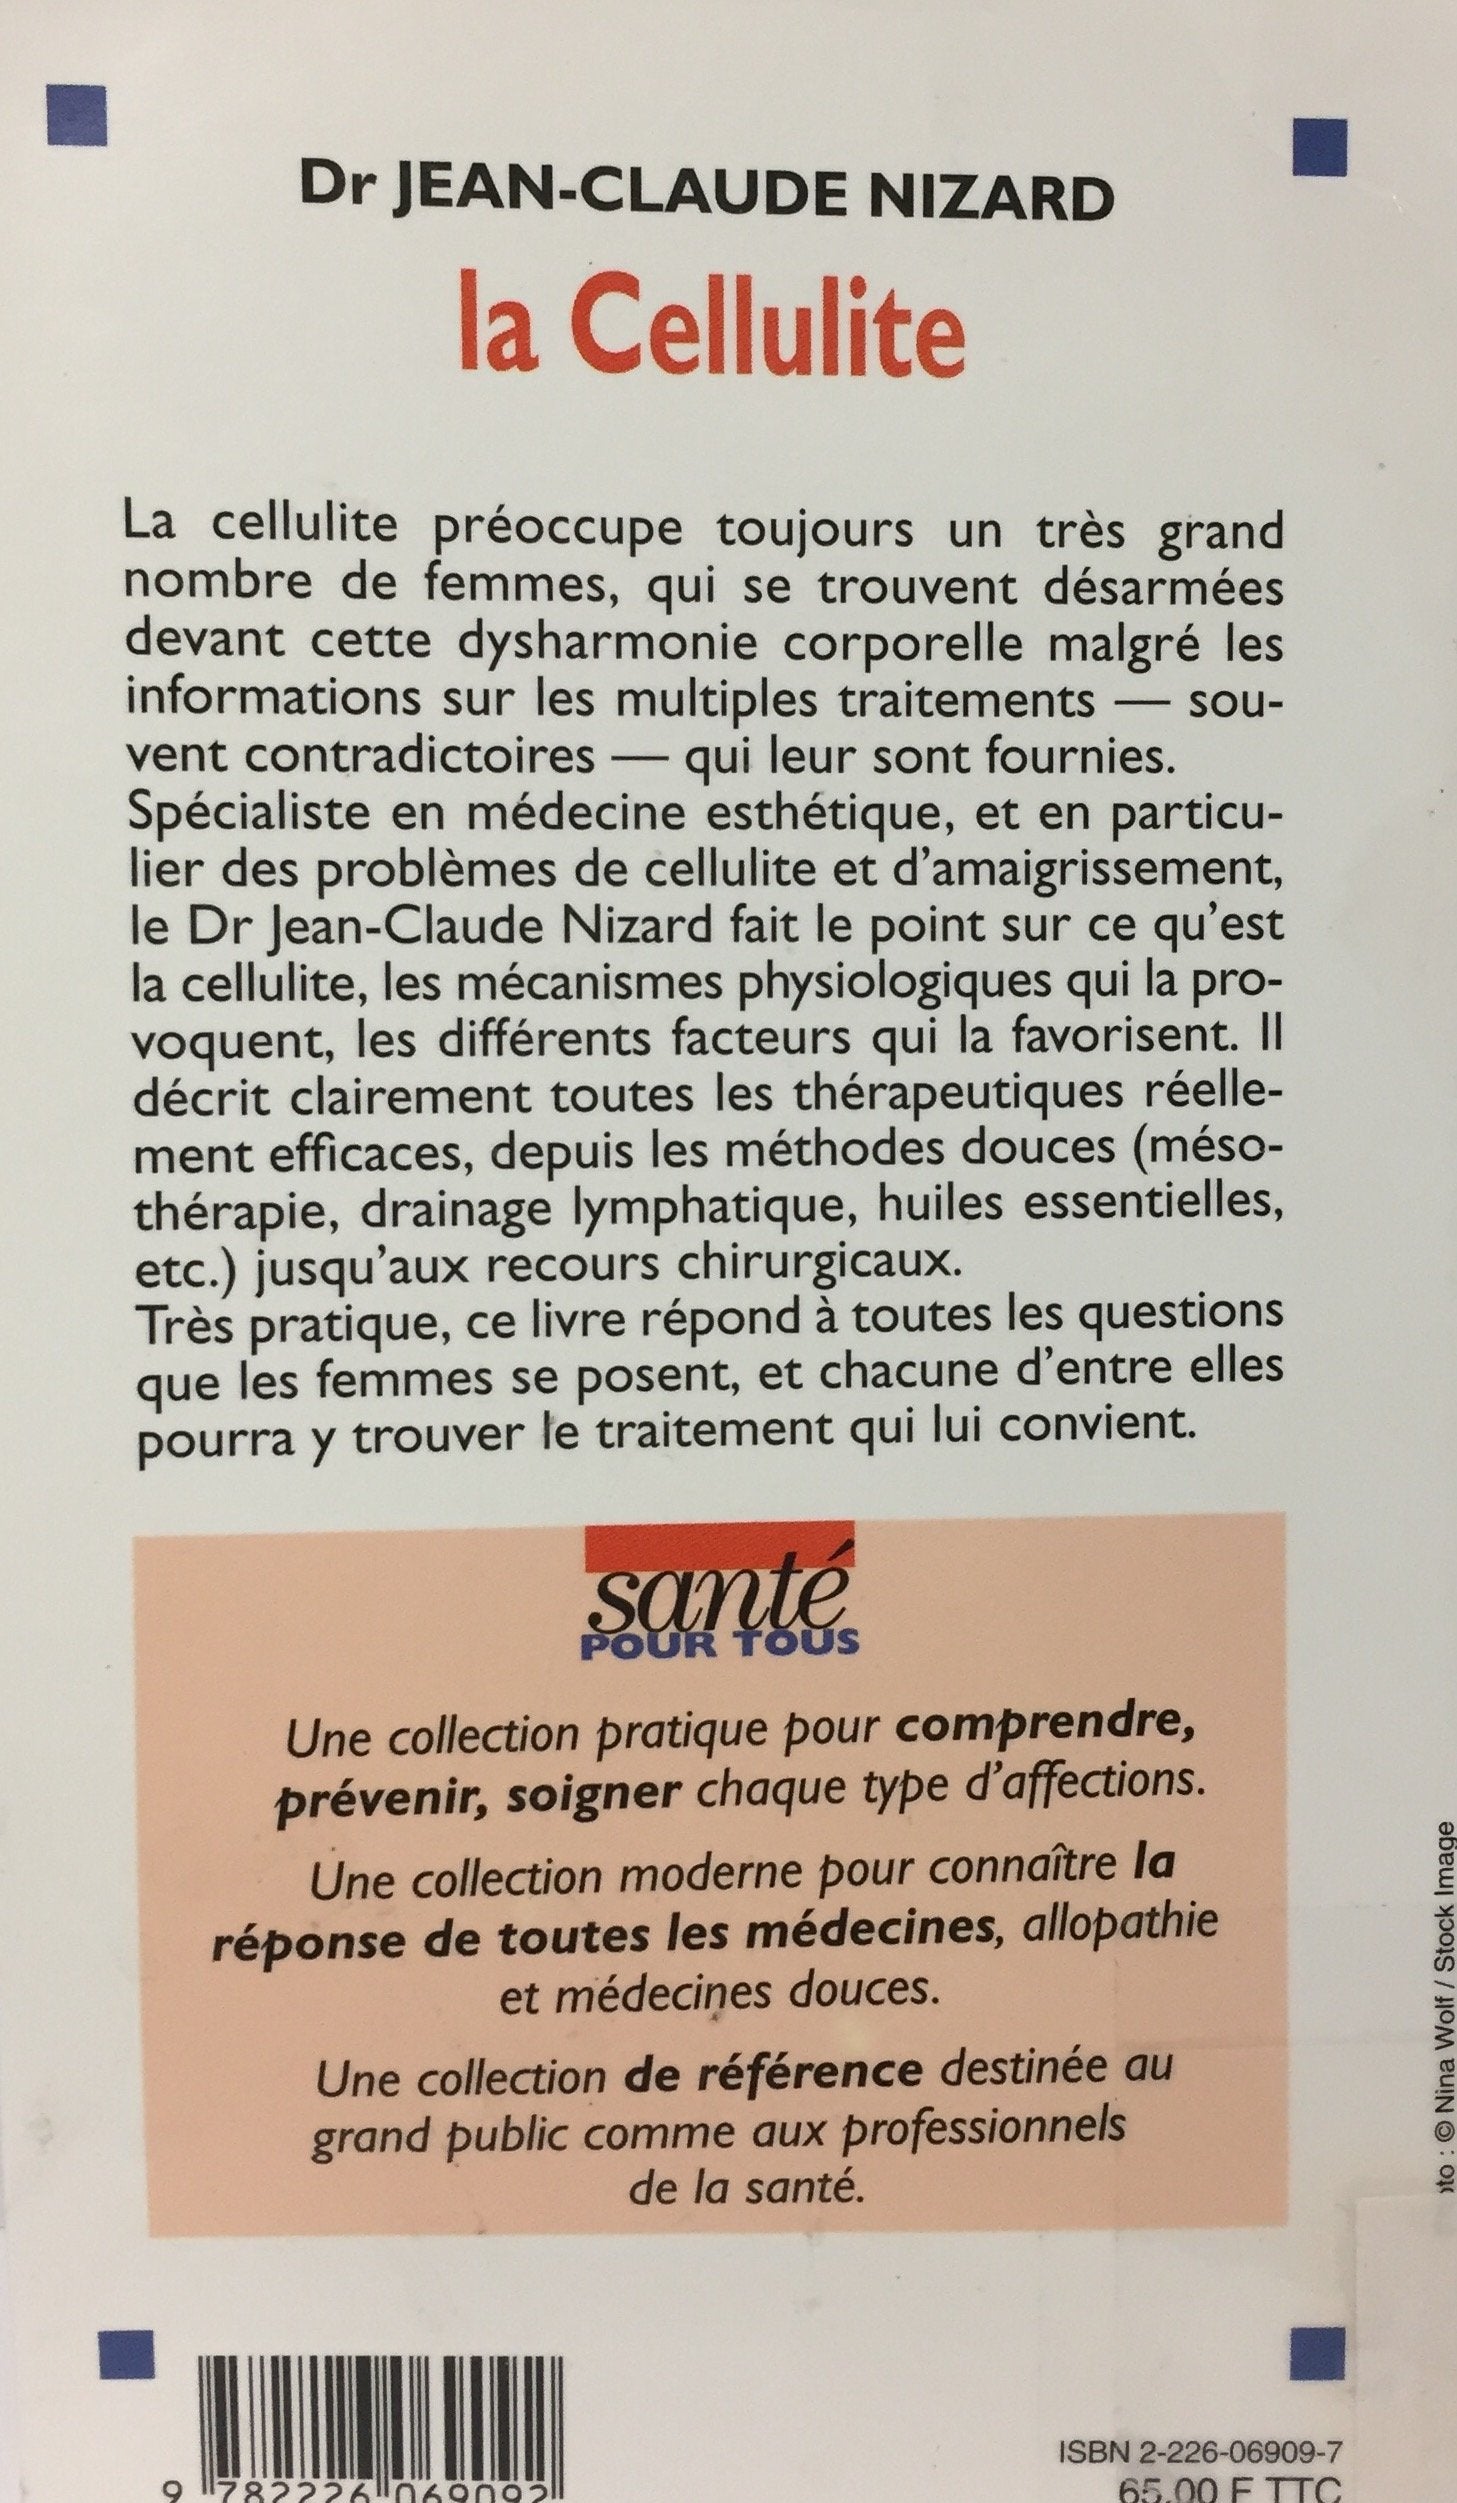 La cellulite (Dr Jean-Claude Nizard)